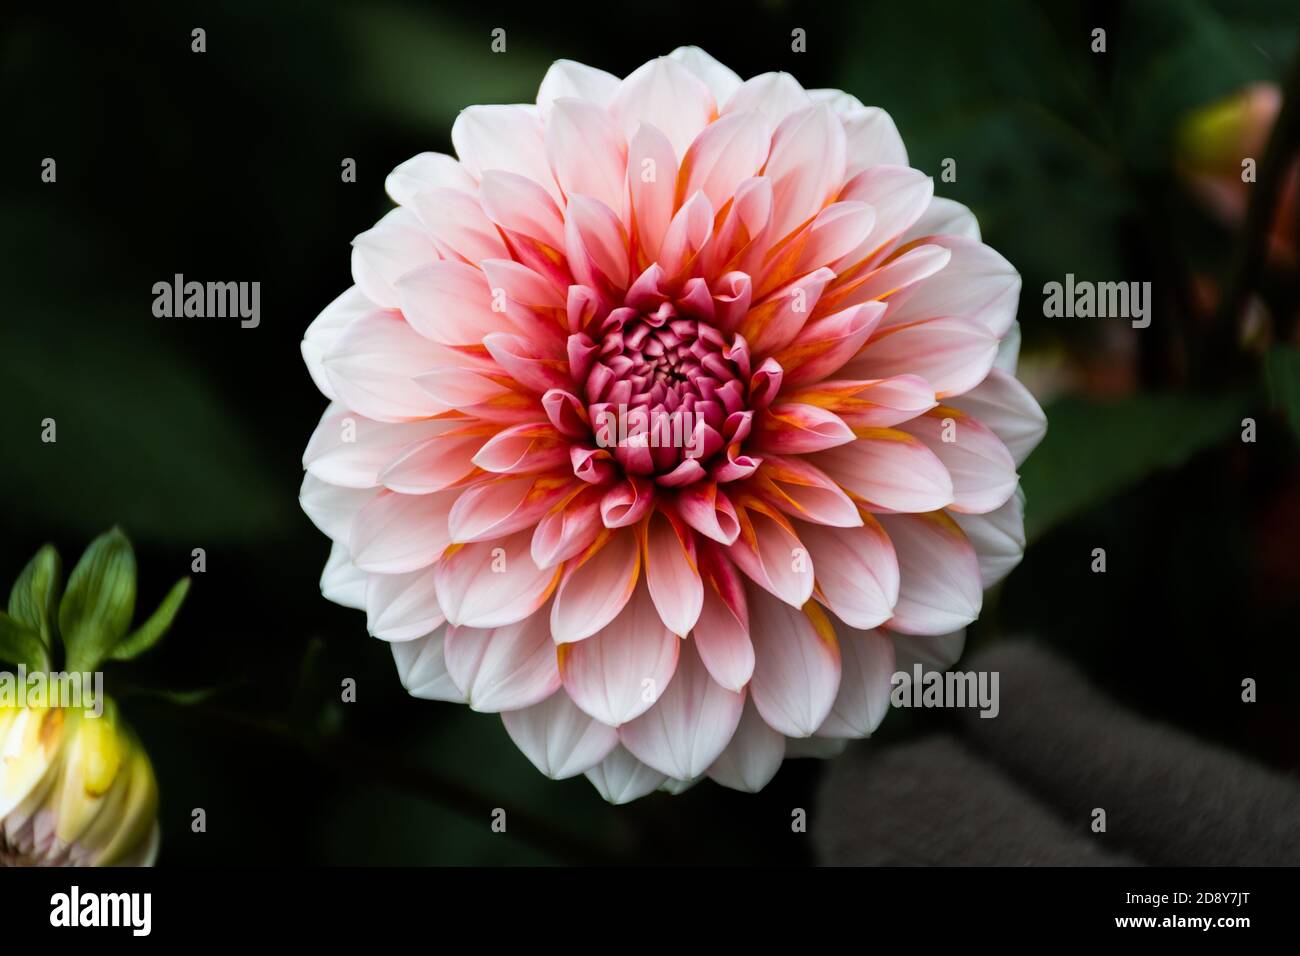 Beautiful white, pink and orange dahlia flower with dark background, close up Stock Photo